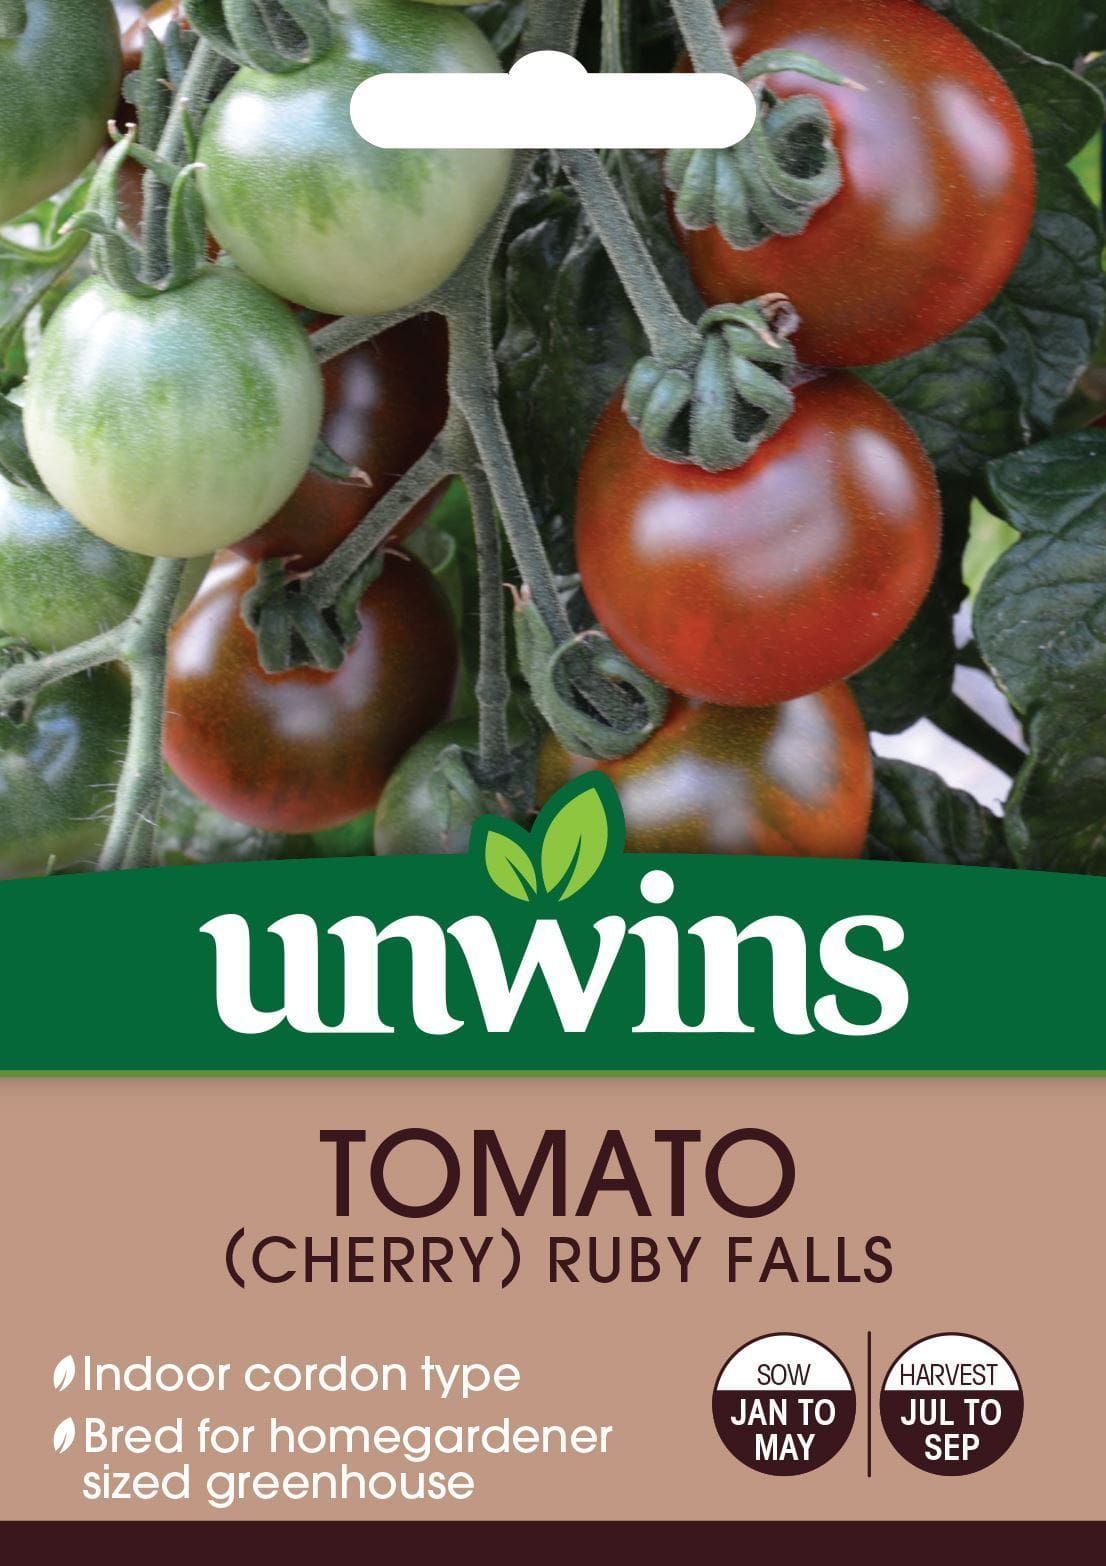 Unwins Tomato Ruby Falls 8 Seeds